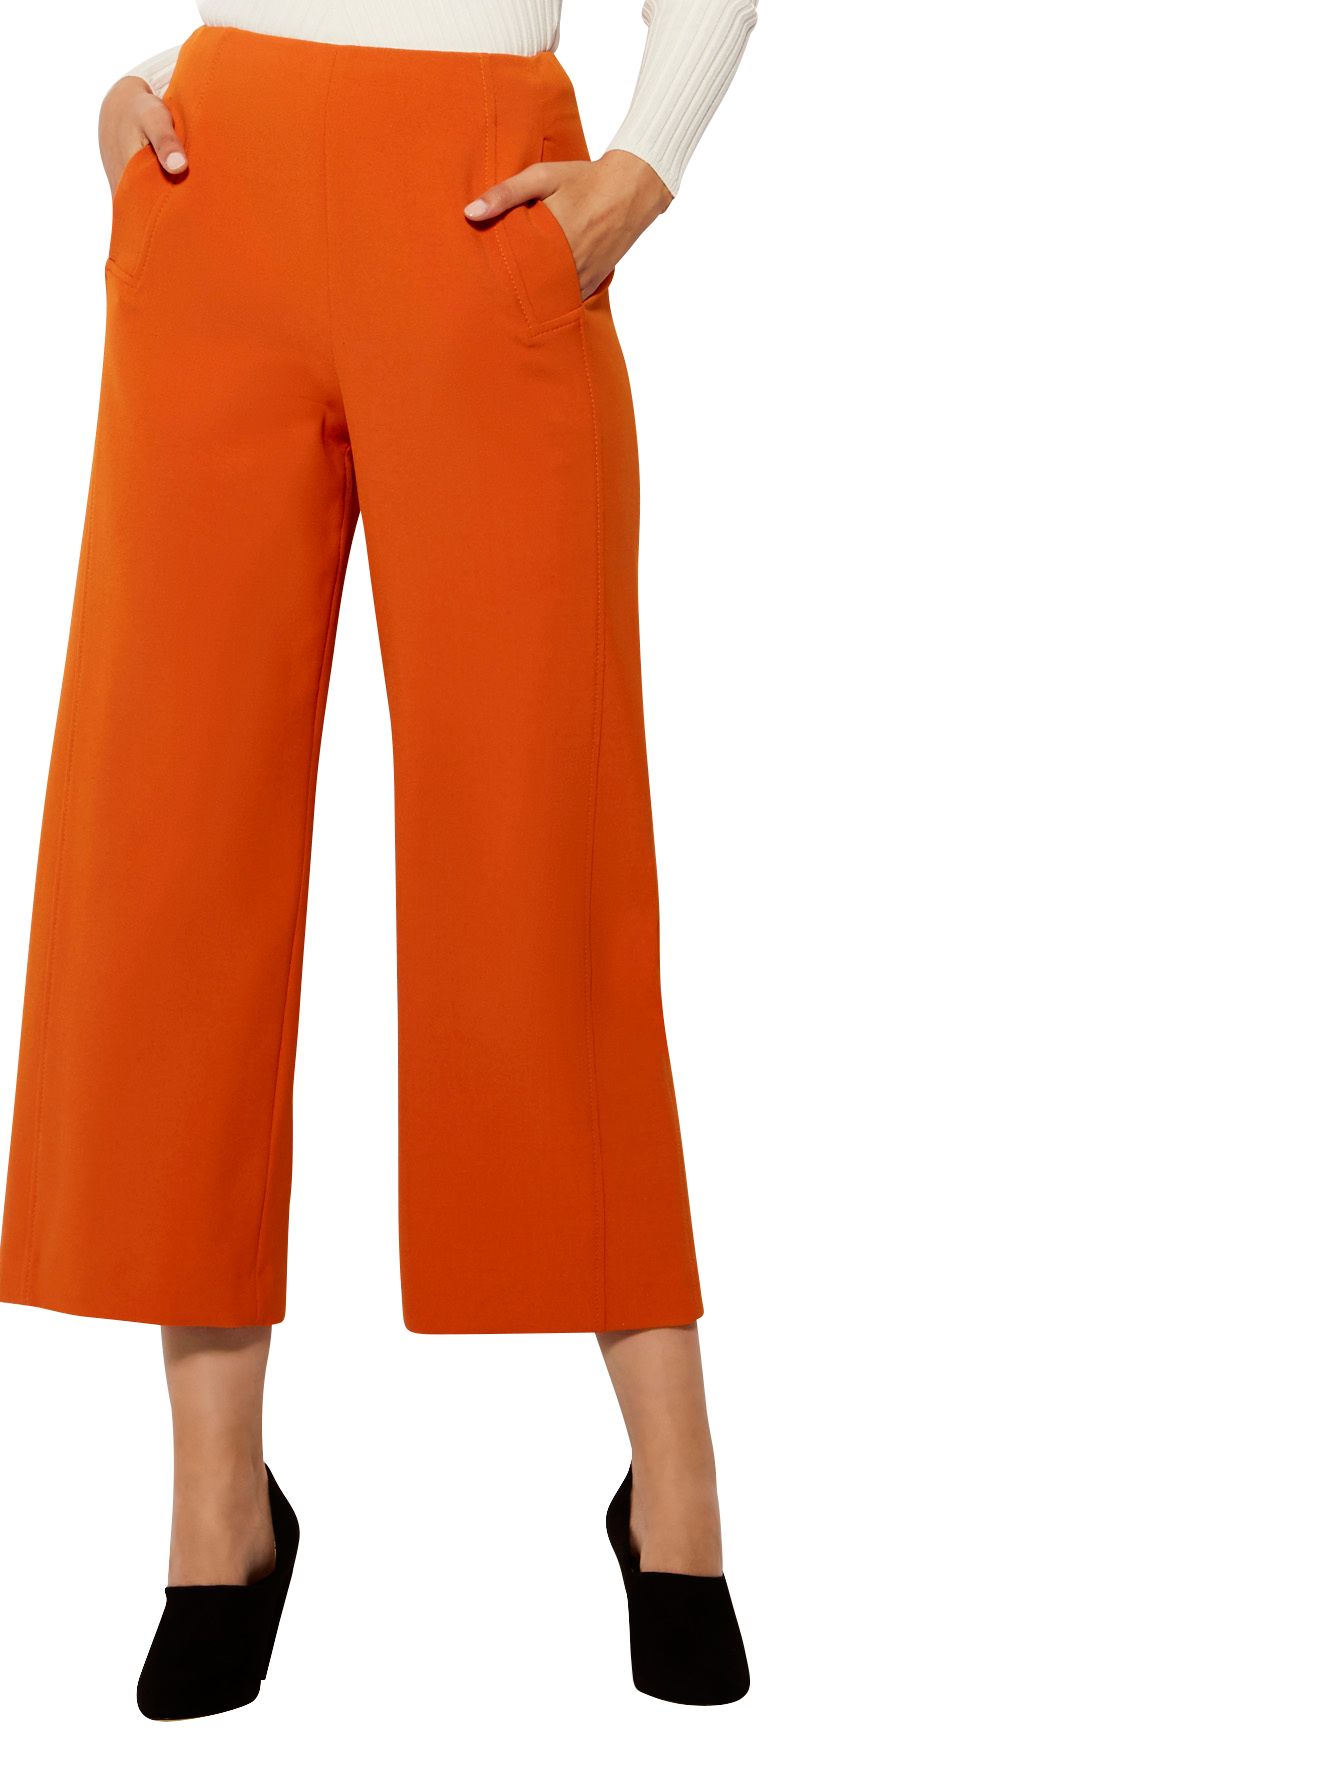 orange high waisted trousers